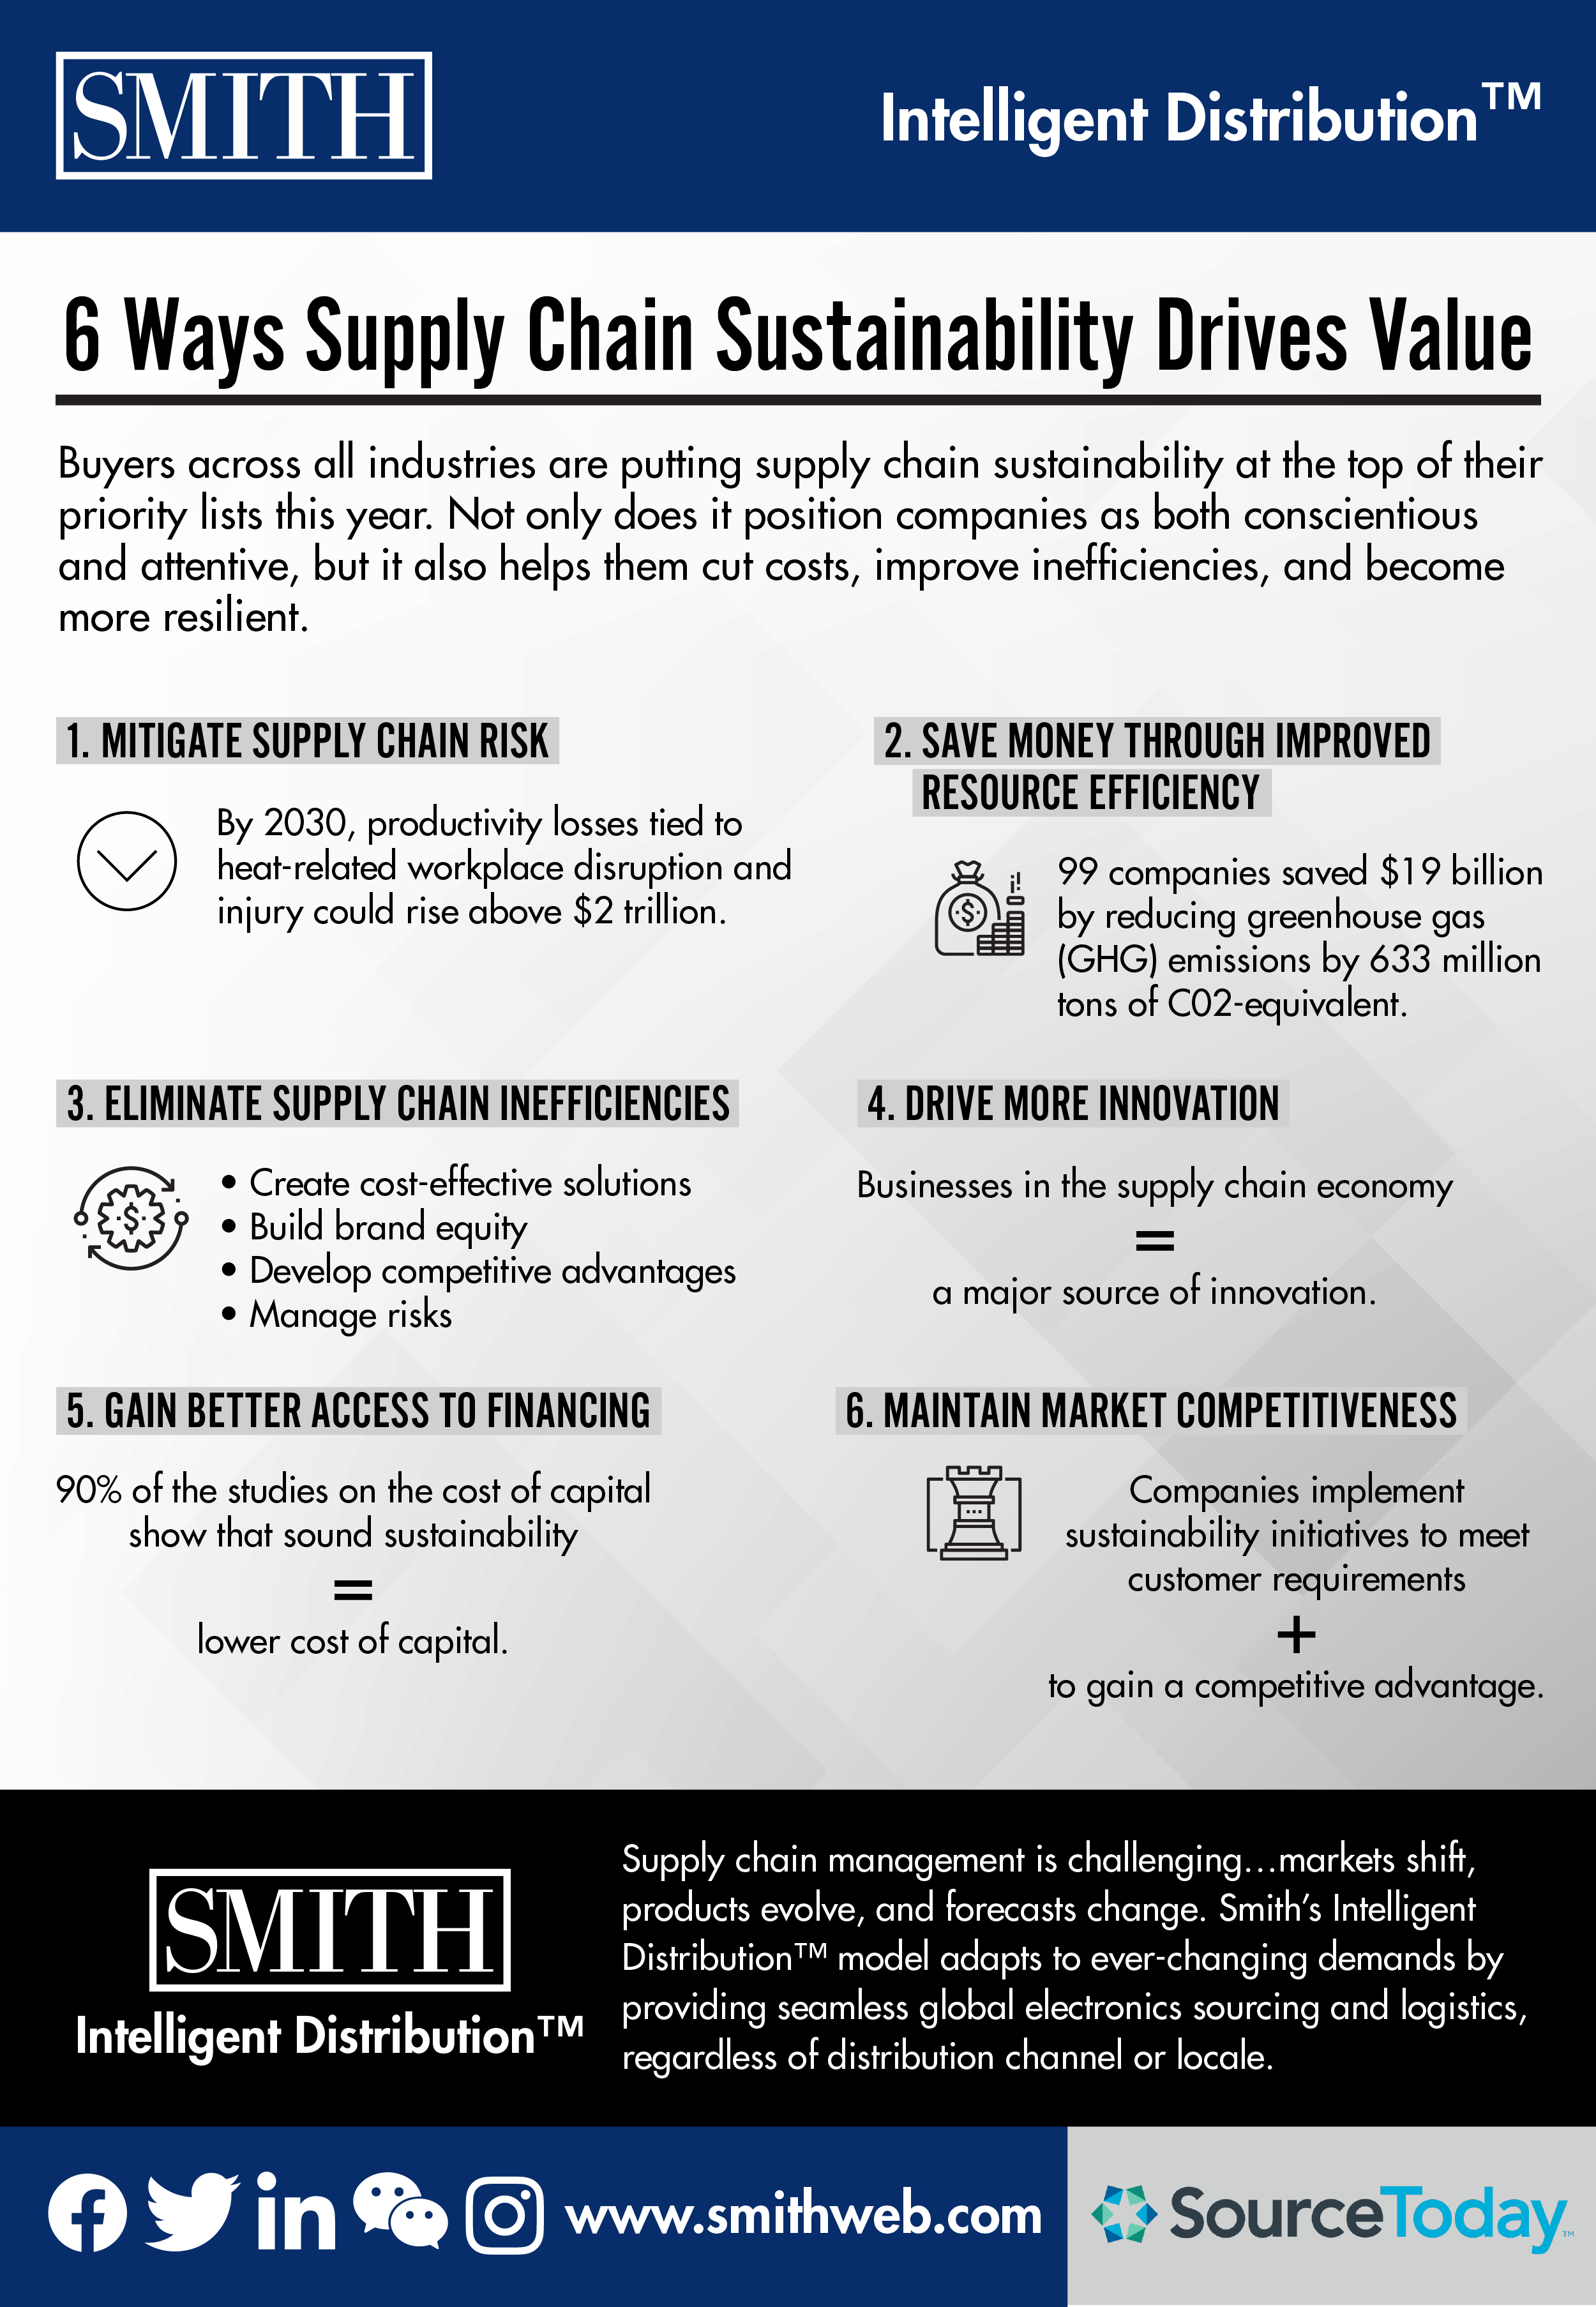 Smith 6 Ways Supply Chain Sustainability Drives Value 7.26.2019 01 1